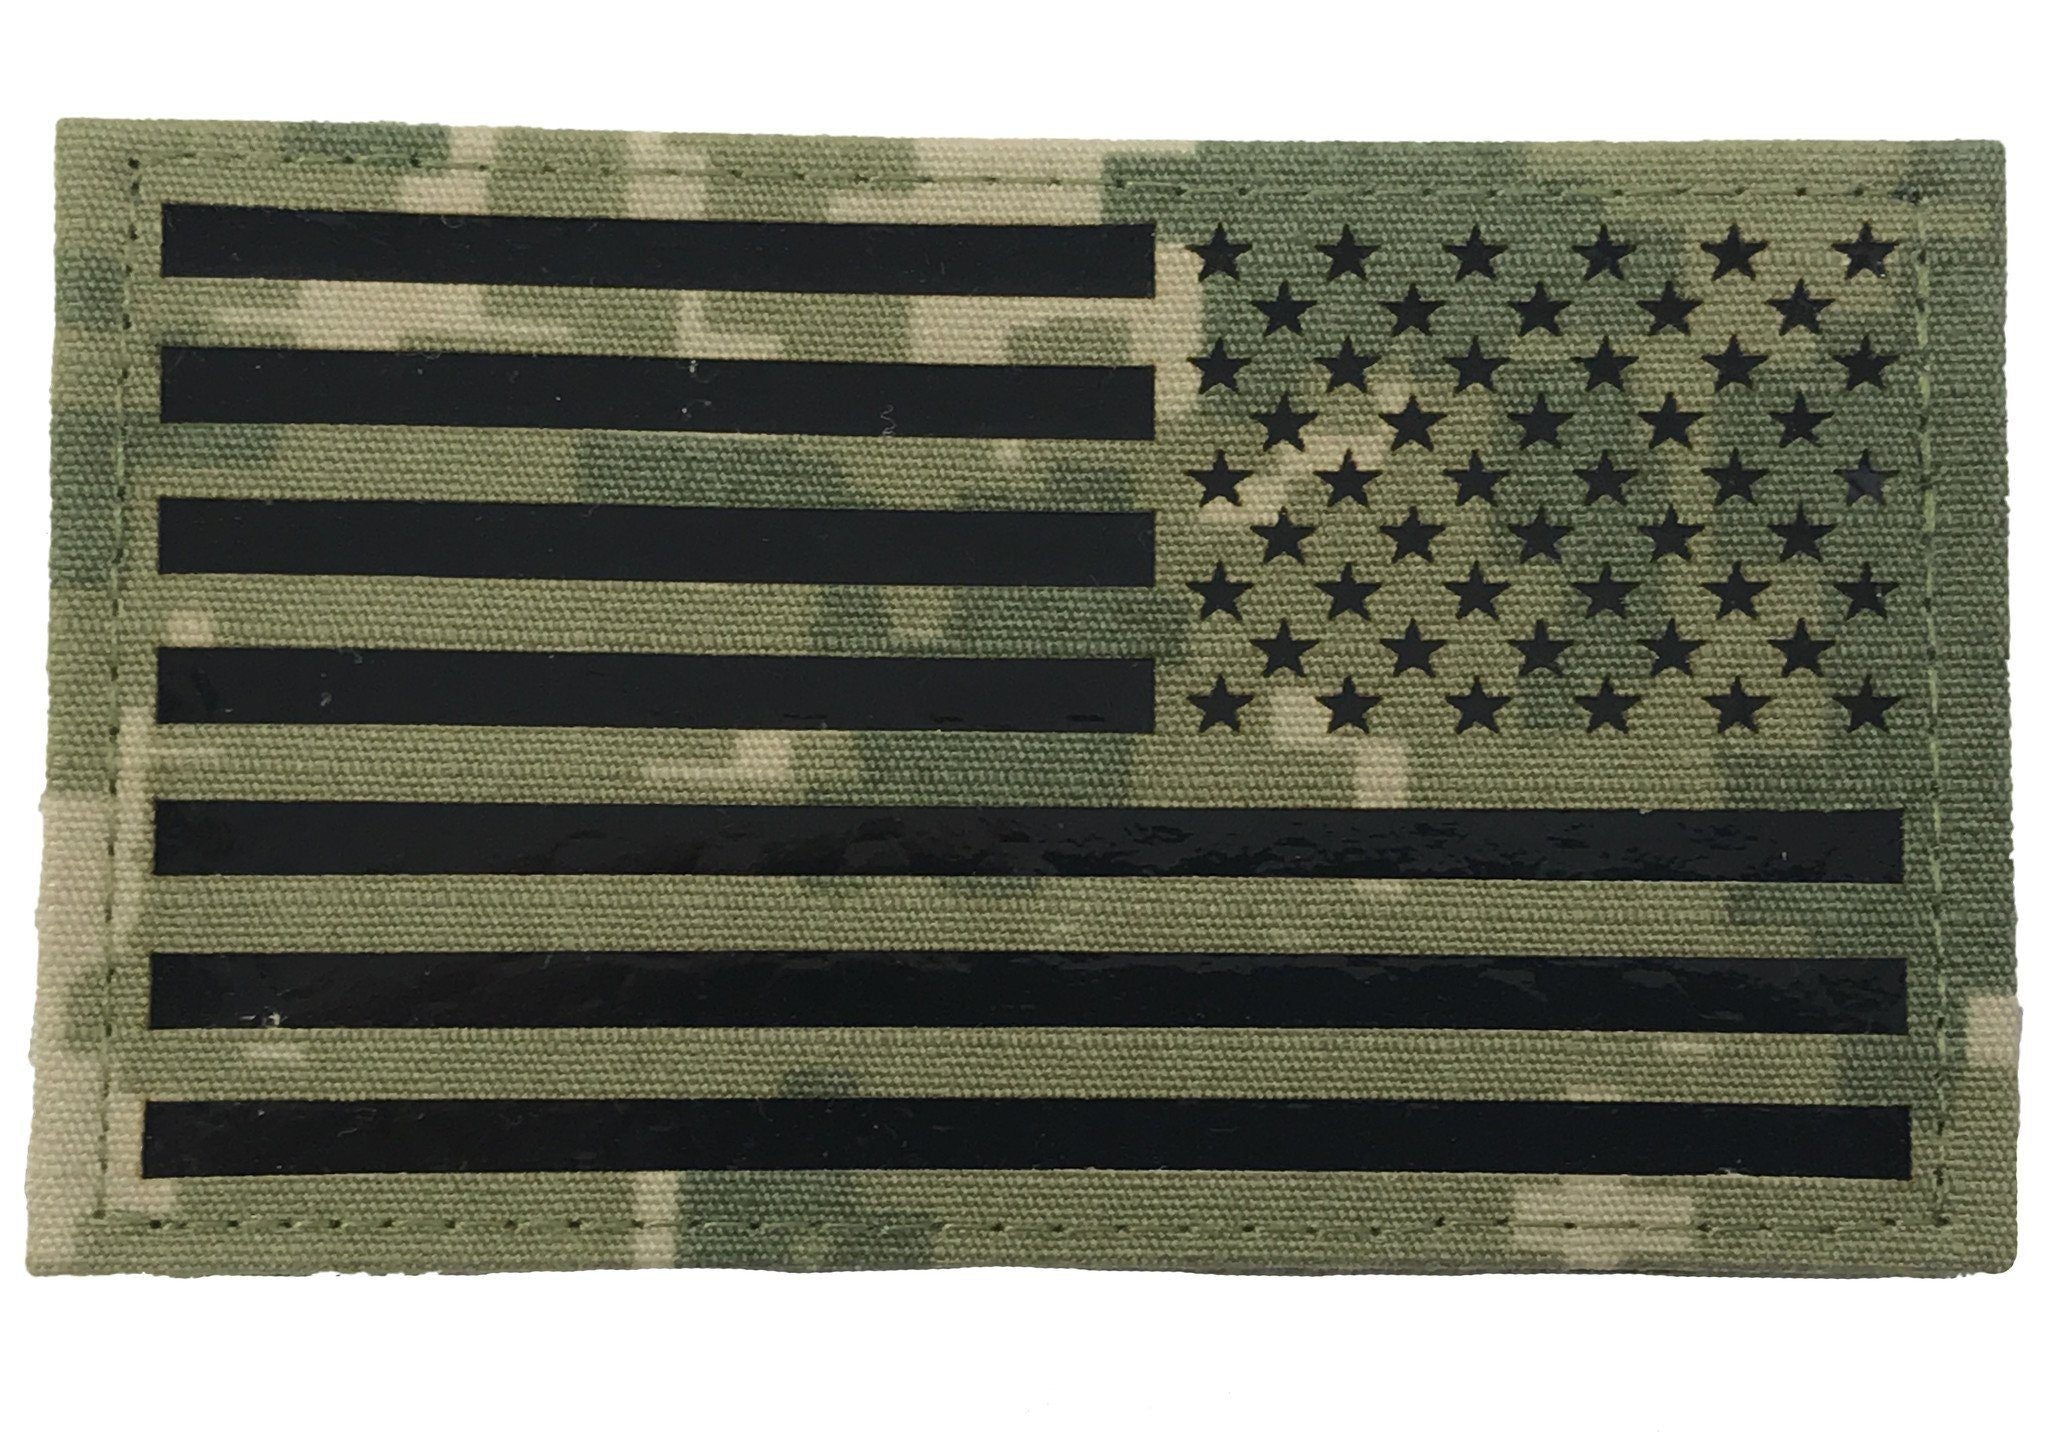 US Flag IR Patch